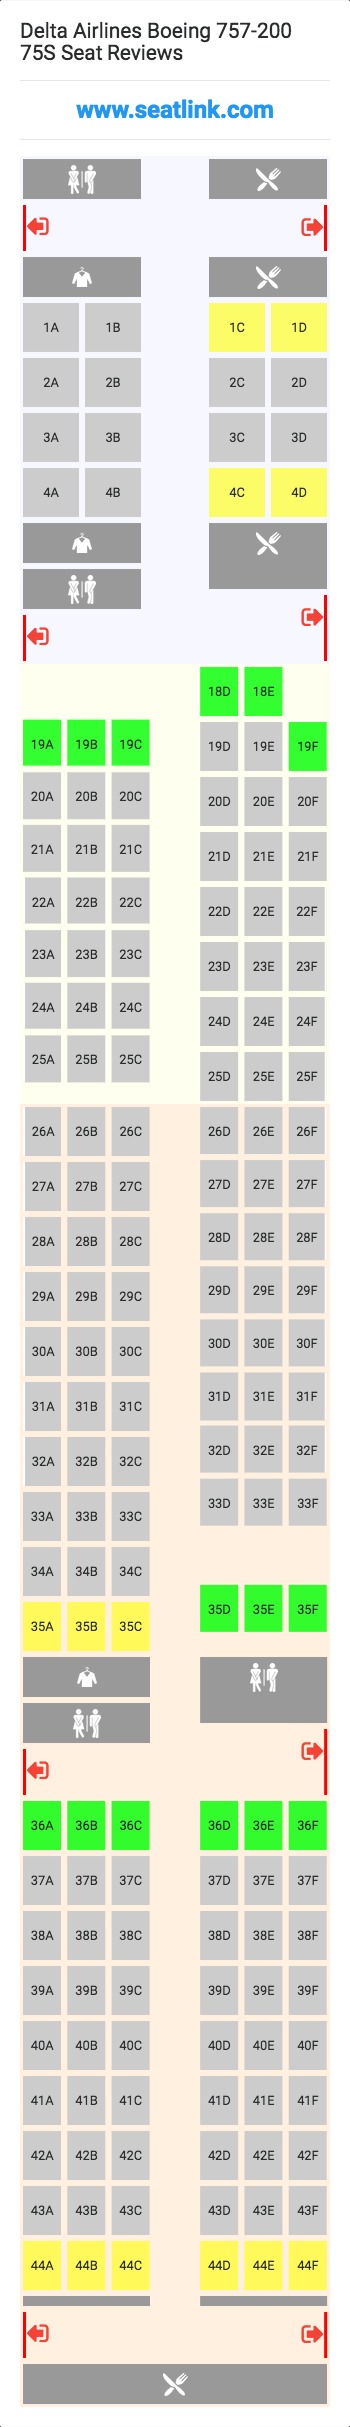 Boeing 757 British Airways Seating Chart